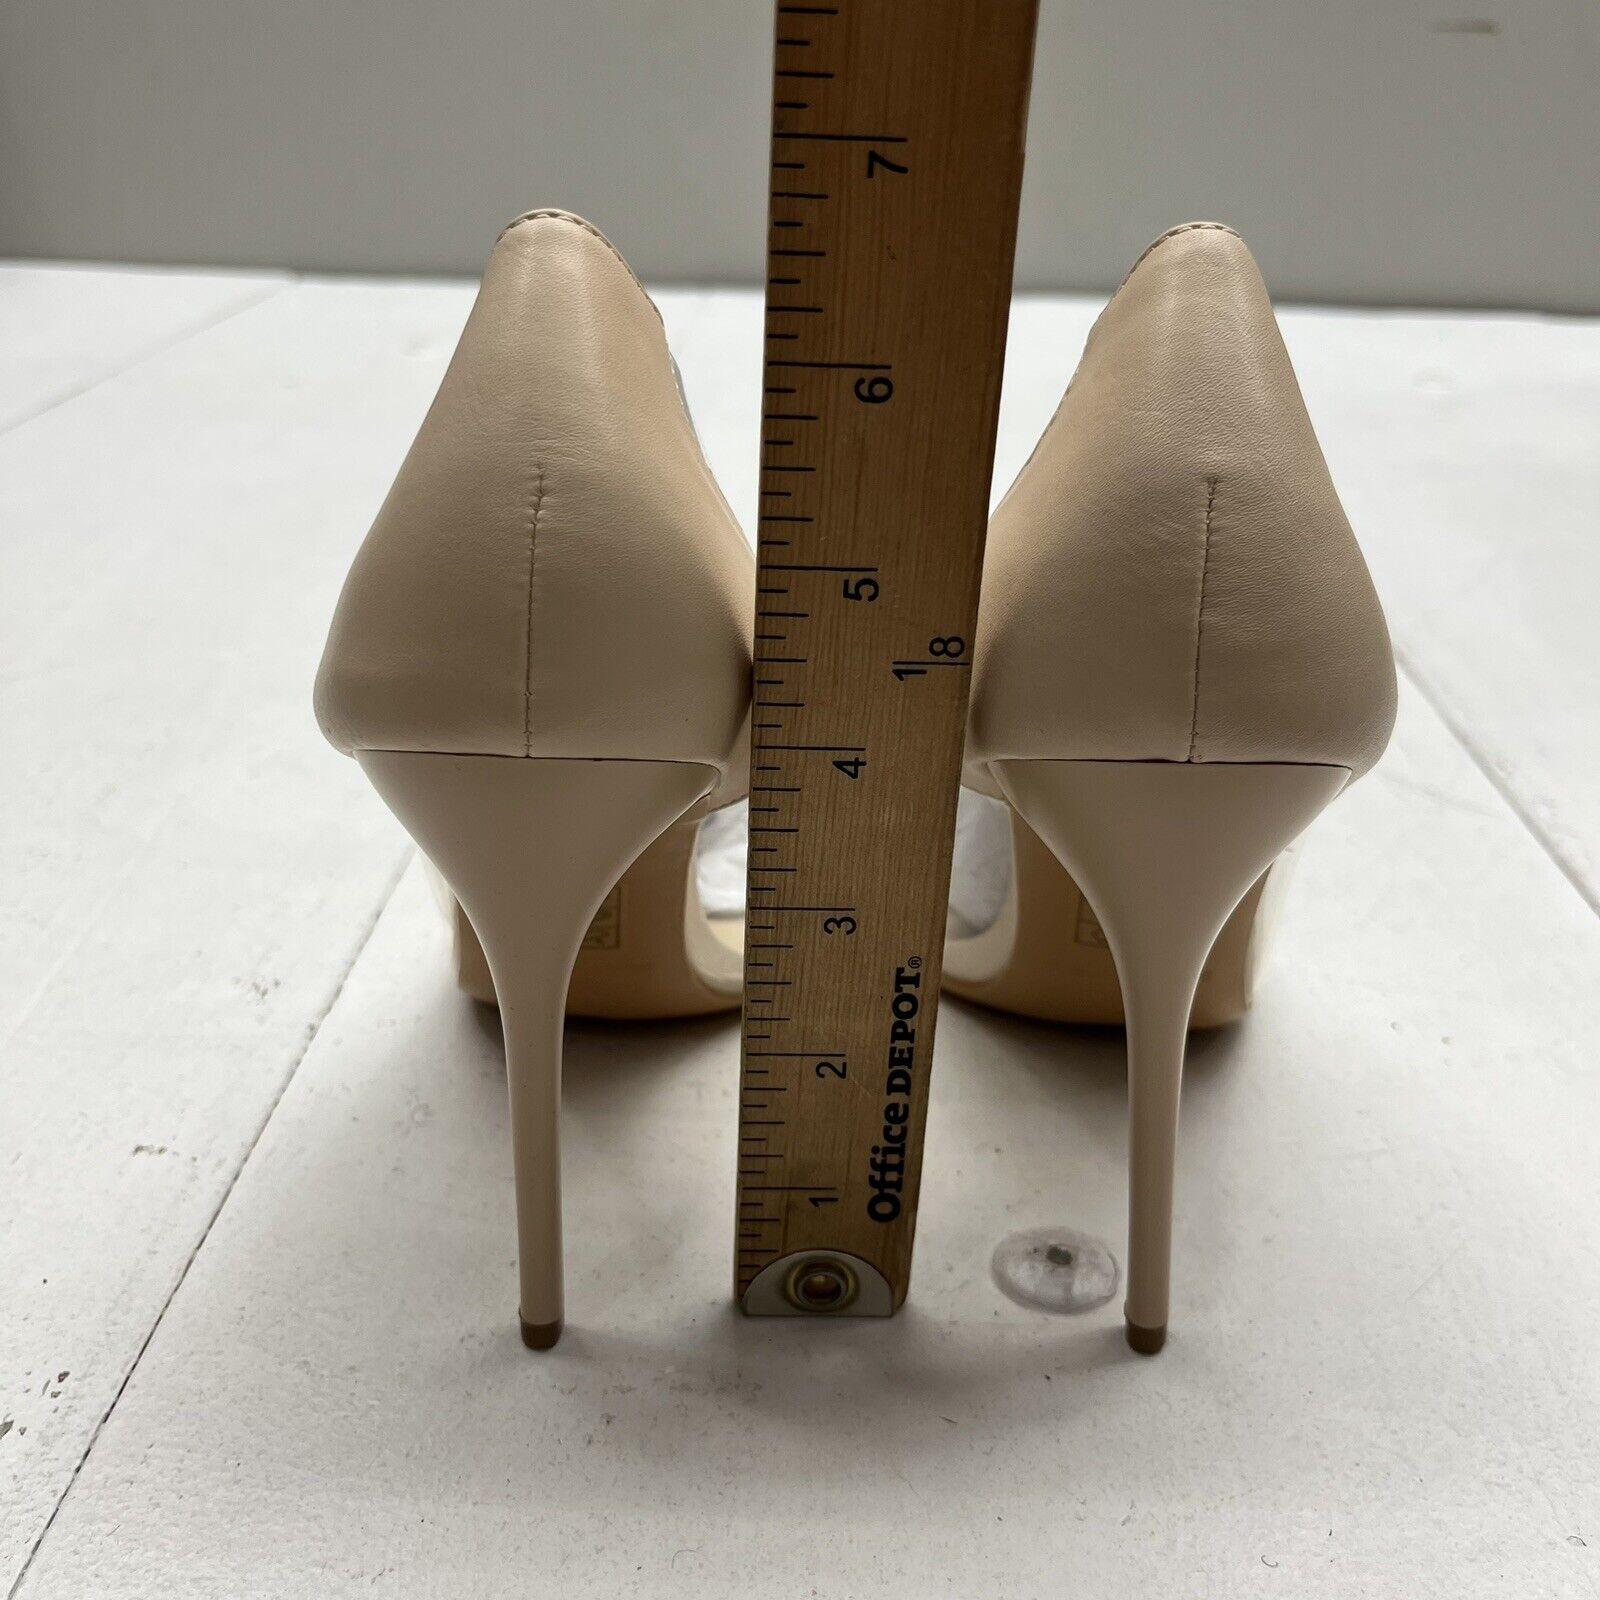 Six inch killer heels bring Victoria Beckham look to High Street |  Independent.ie